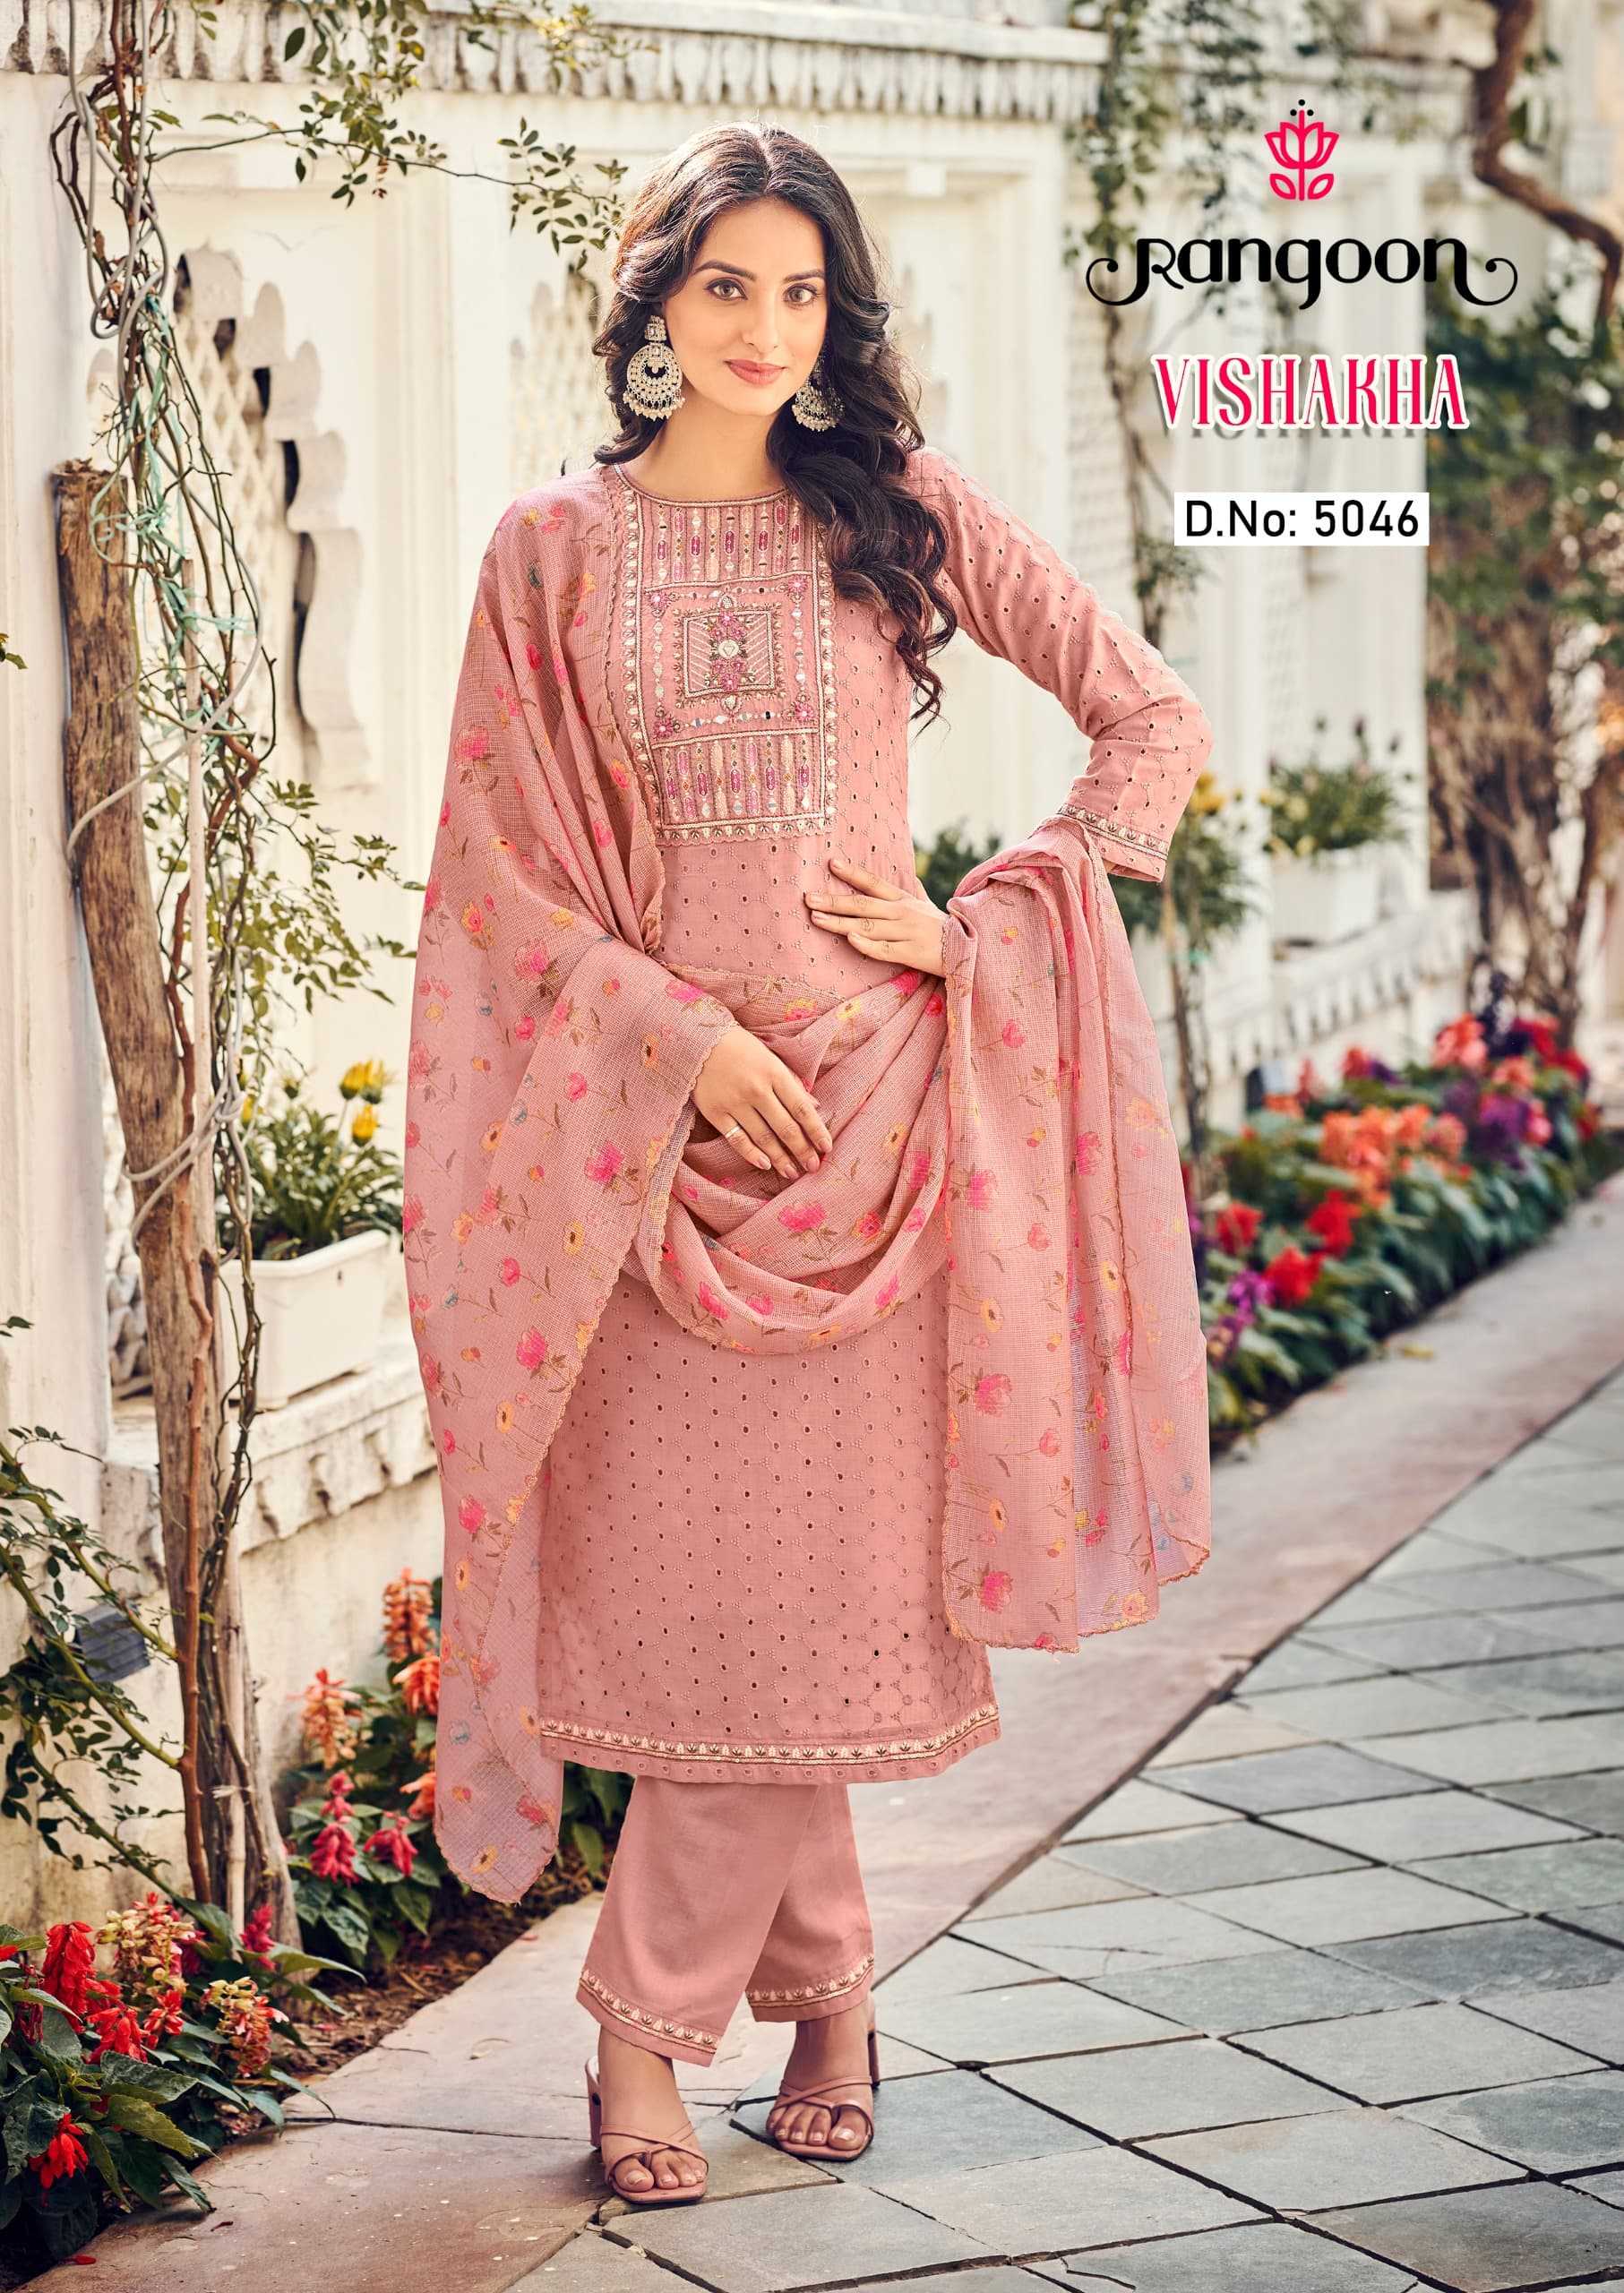 rangoon vishakha full stitch cotton sifli fancy embroidery work amazing design salwar suit     